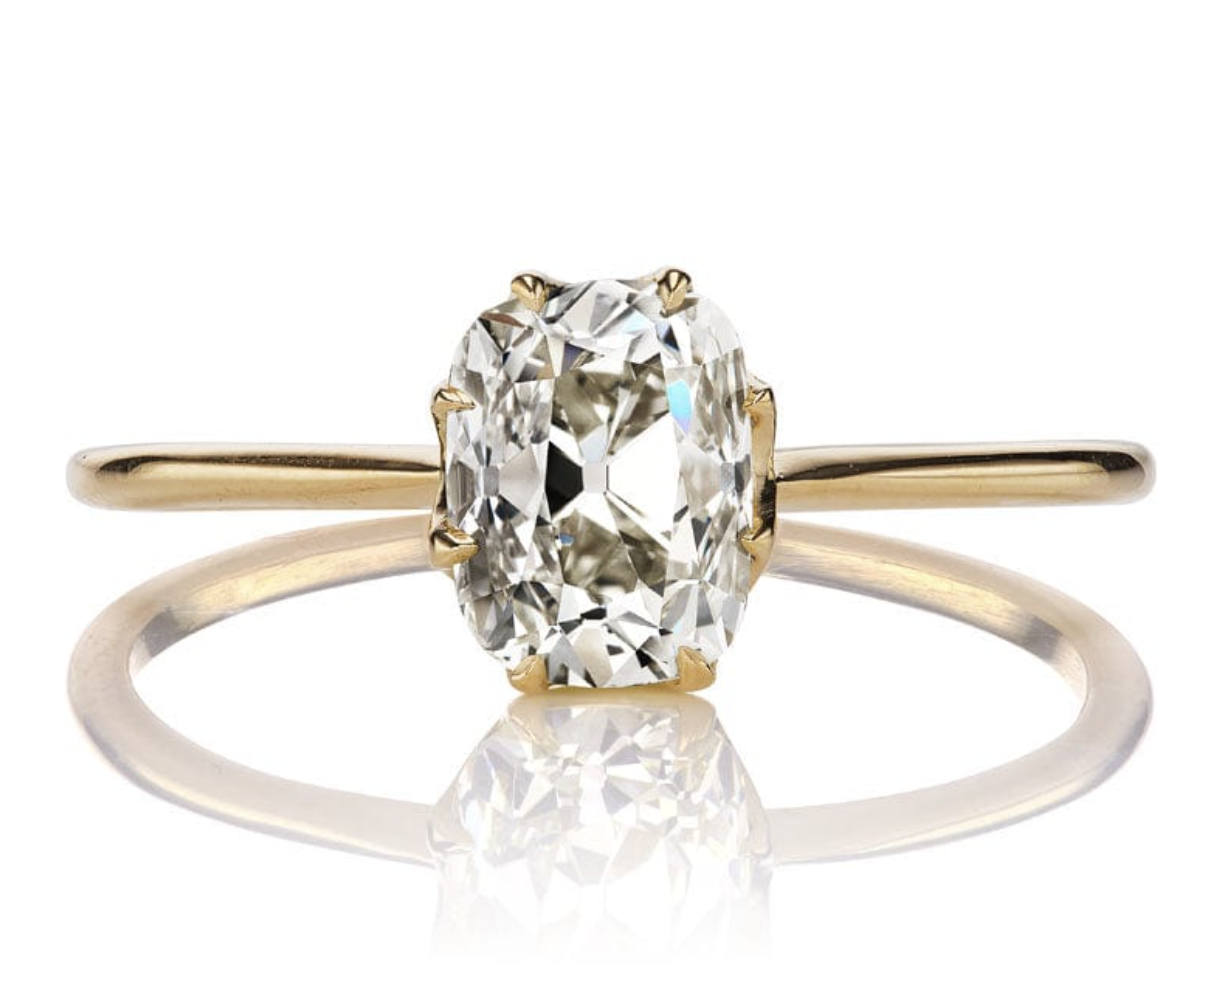 Elongated old mine cut diamond engagement ring